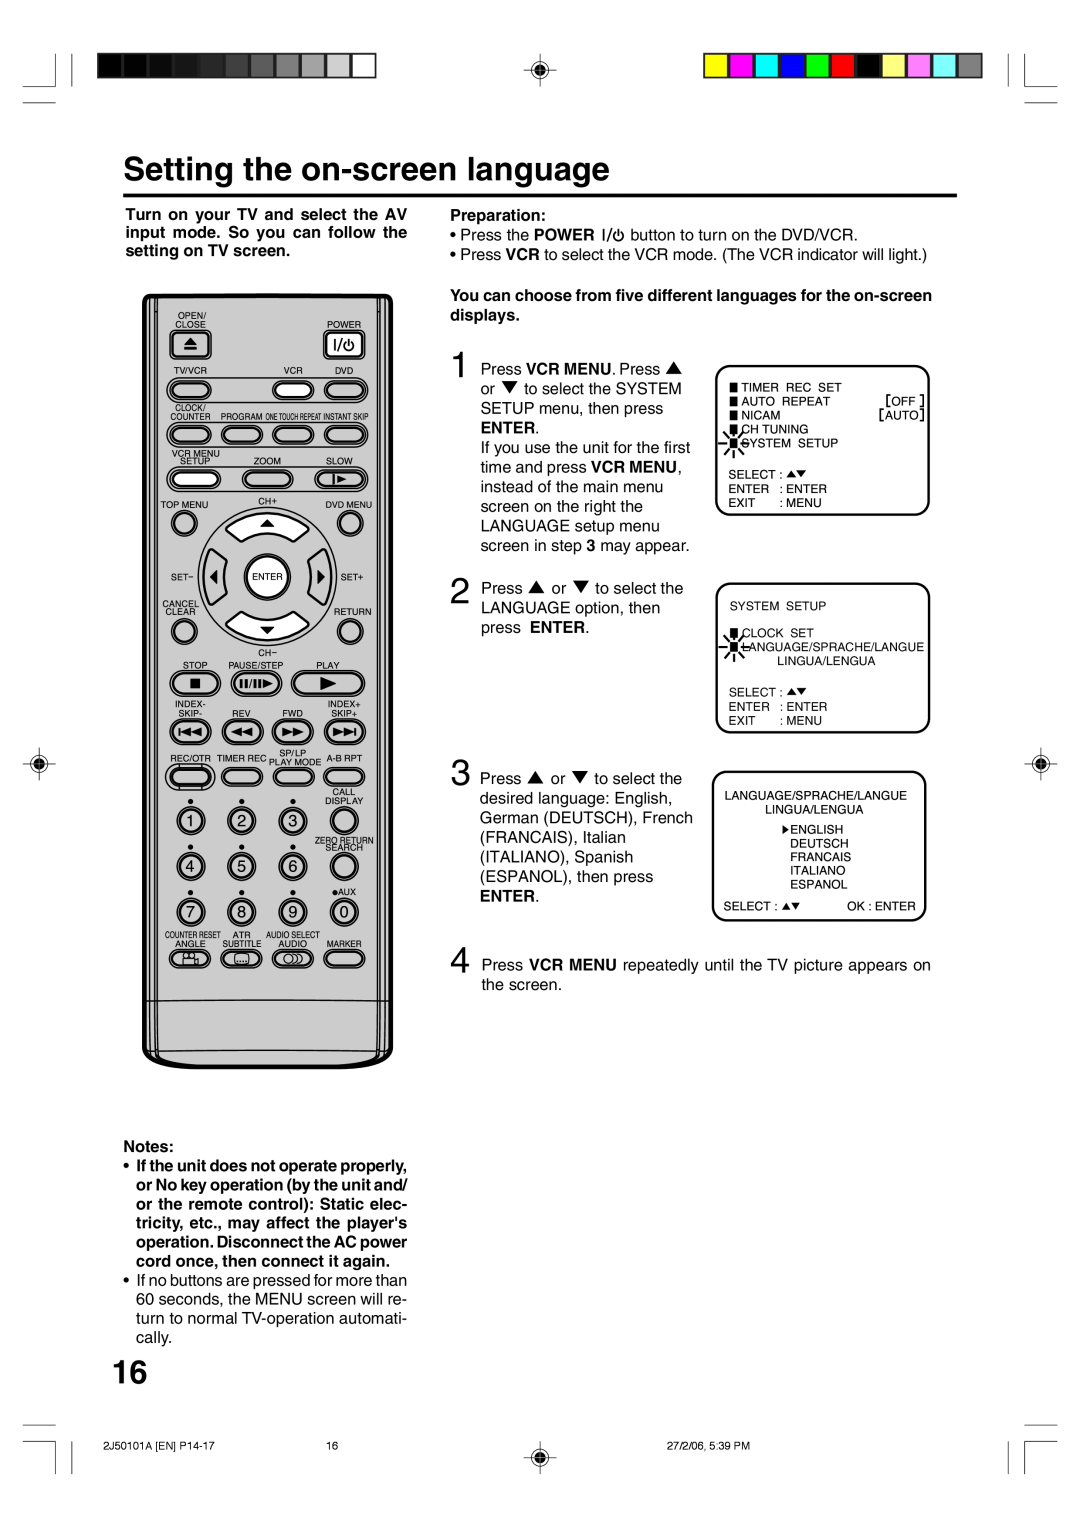 Toshiba SD-37VBSB manual Setting the on-screen language, Preparation, Enter 